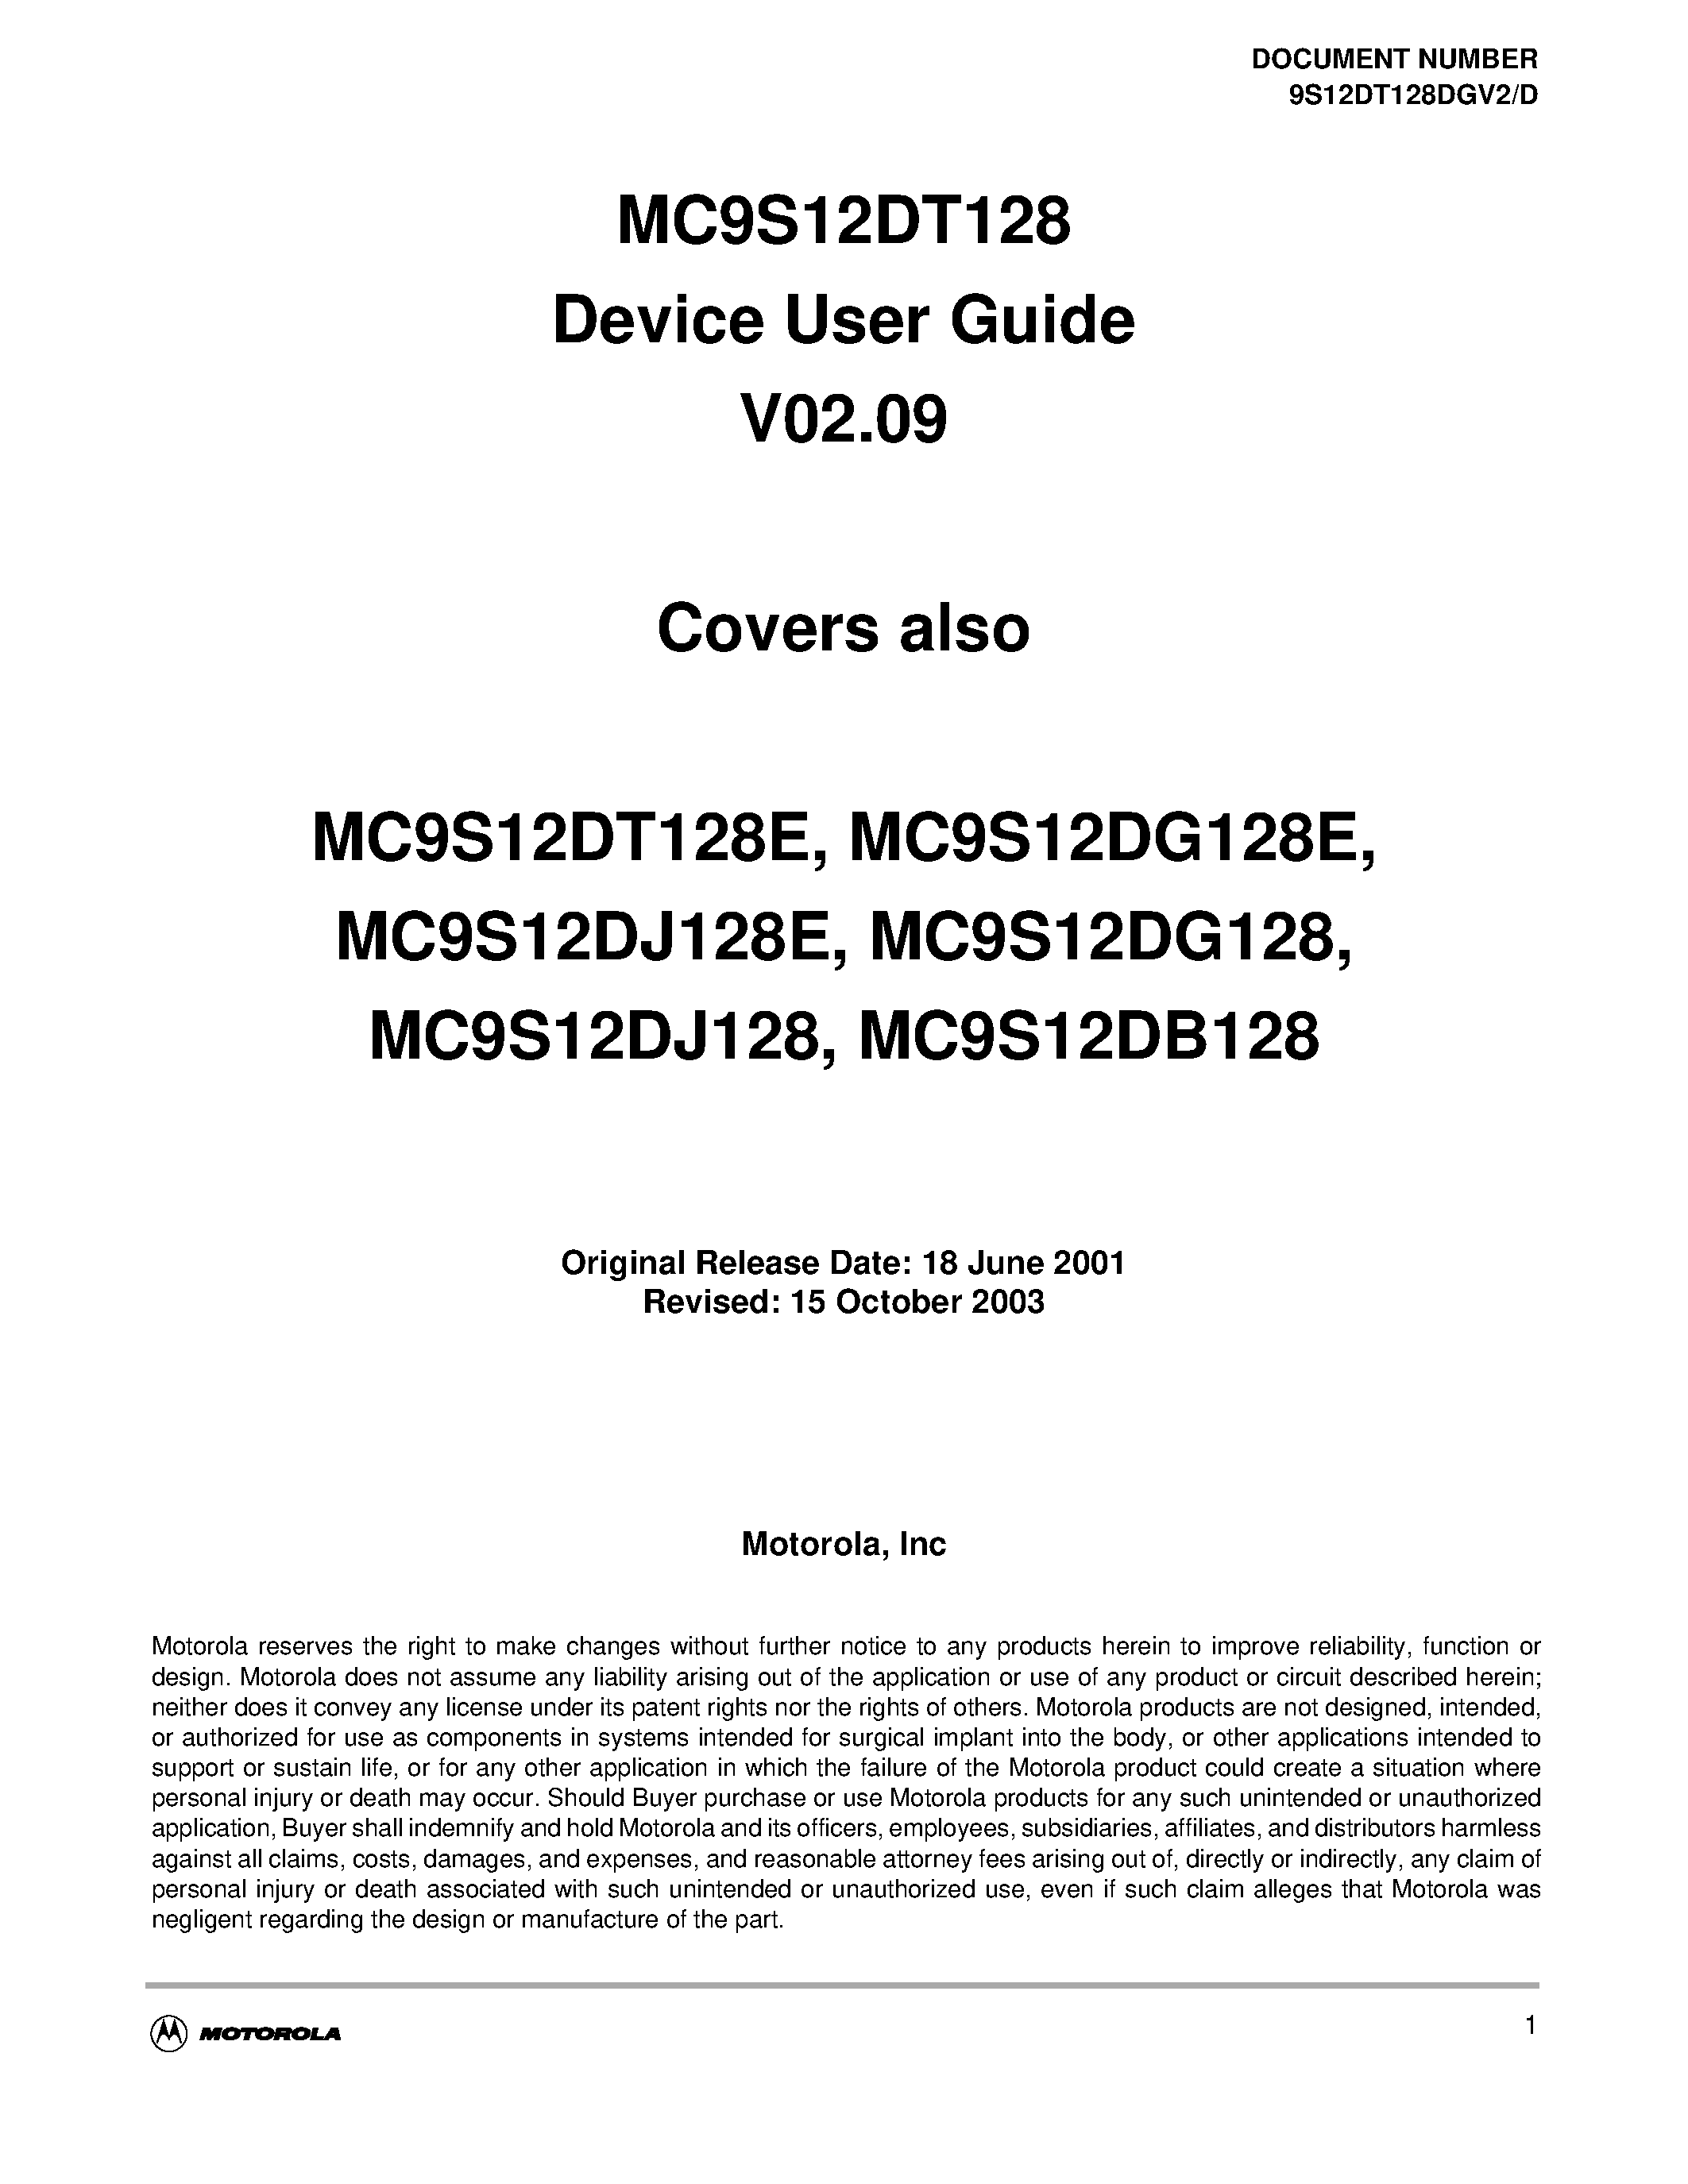 Даташит S12CPUV2D - MC9S12DT128 Device User Guide V02.09 страница 1